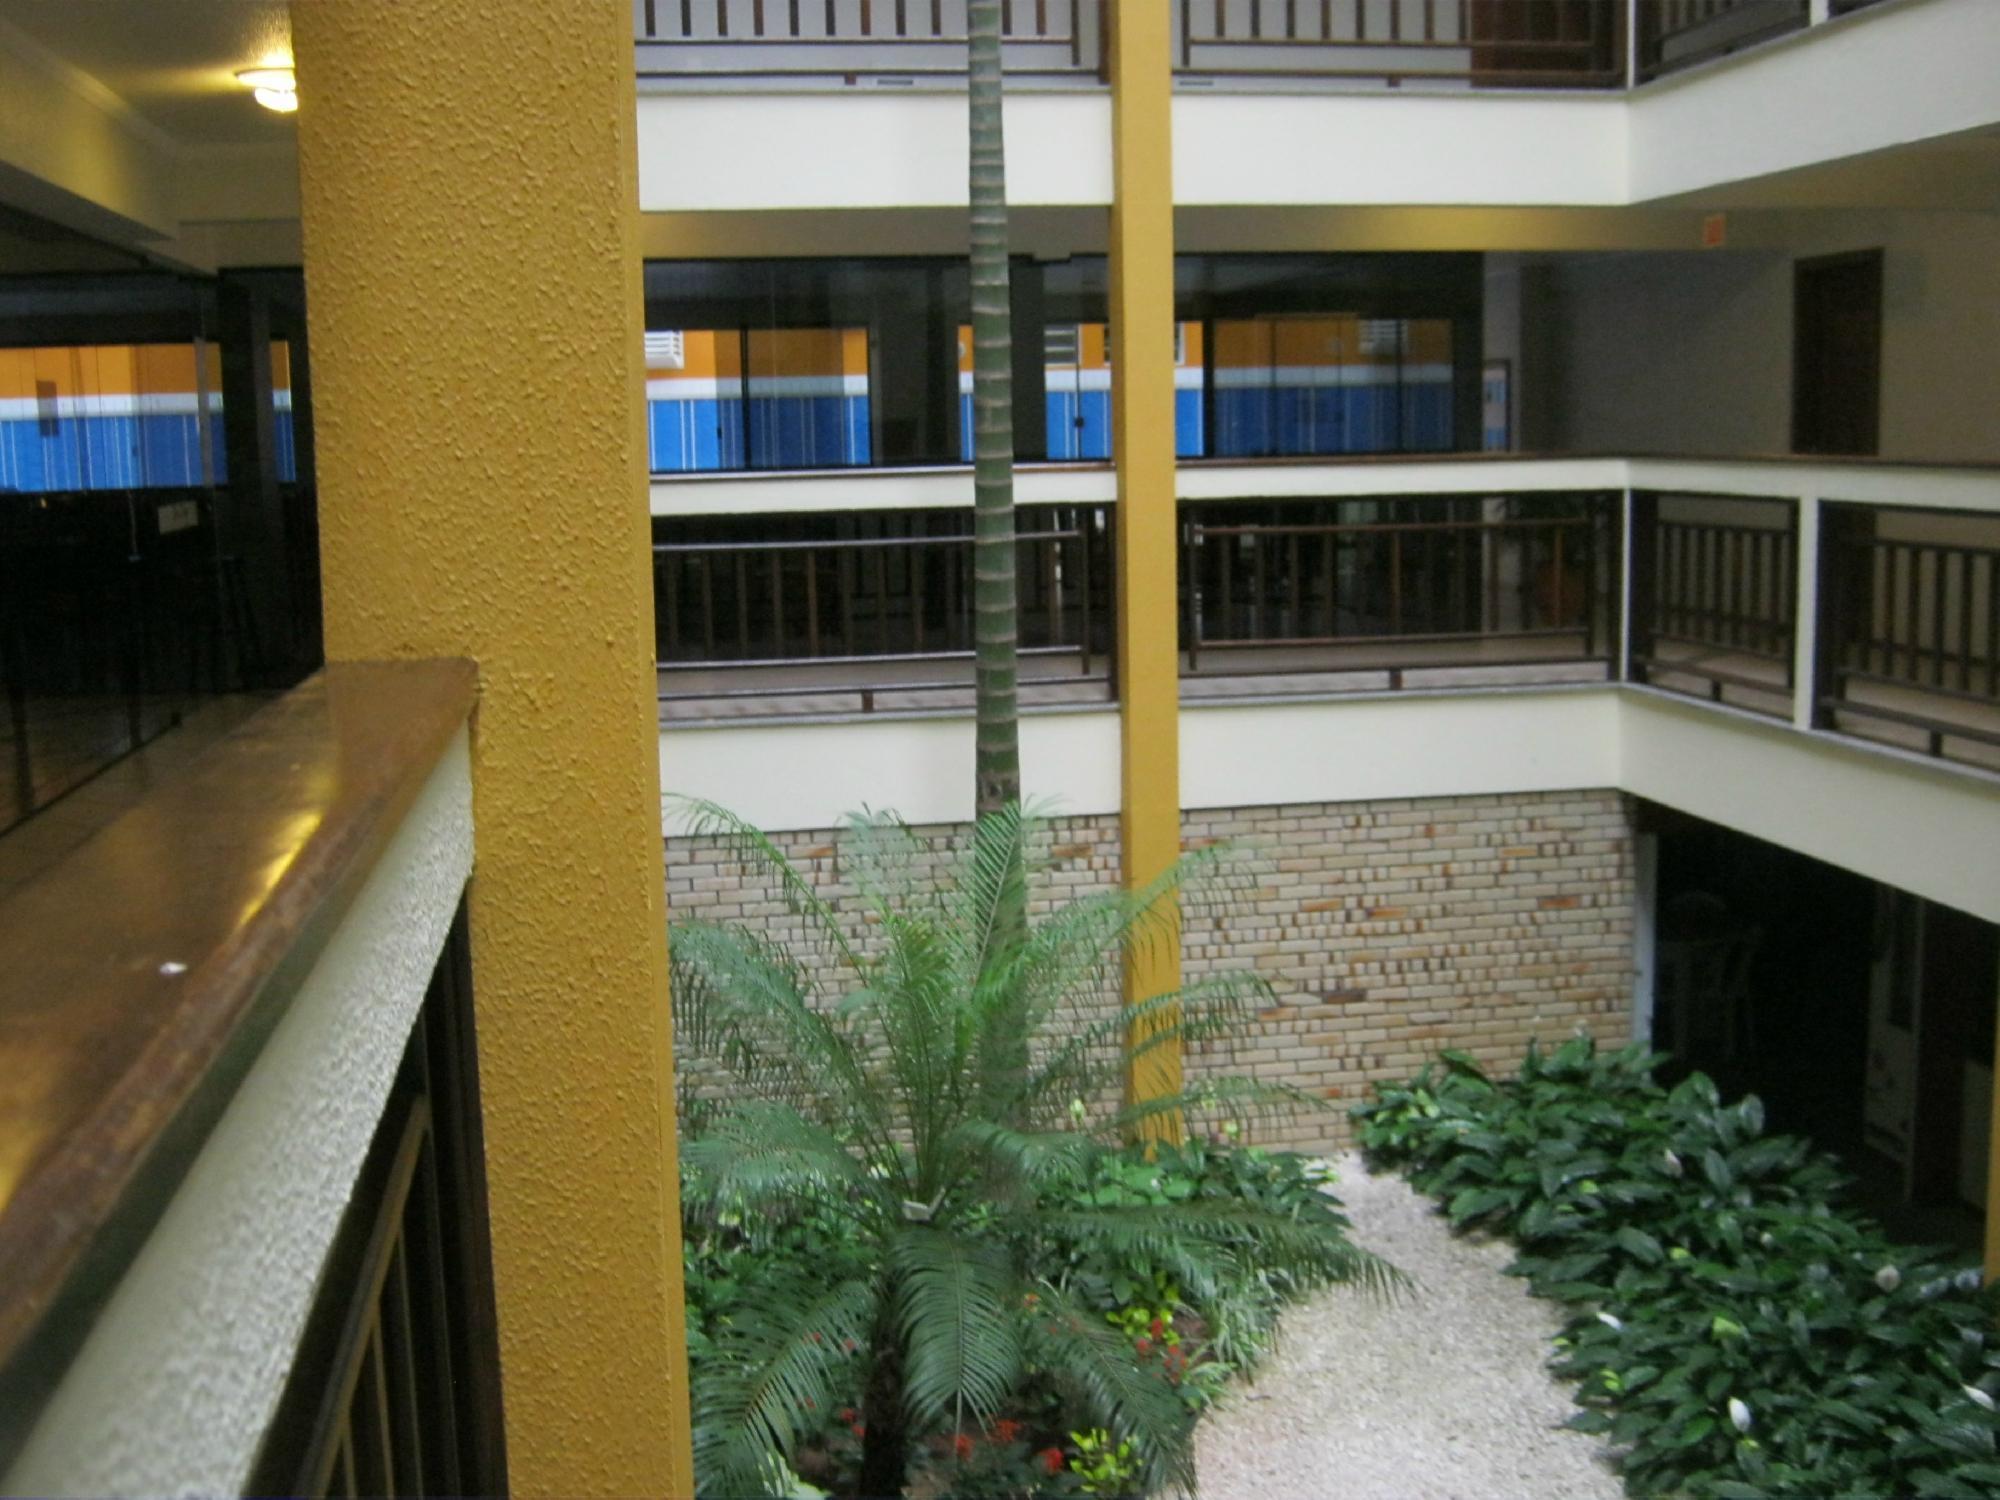 Hanna San Diego Apart Hotel - Canasvieiras Florianopolis Exterior photo